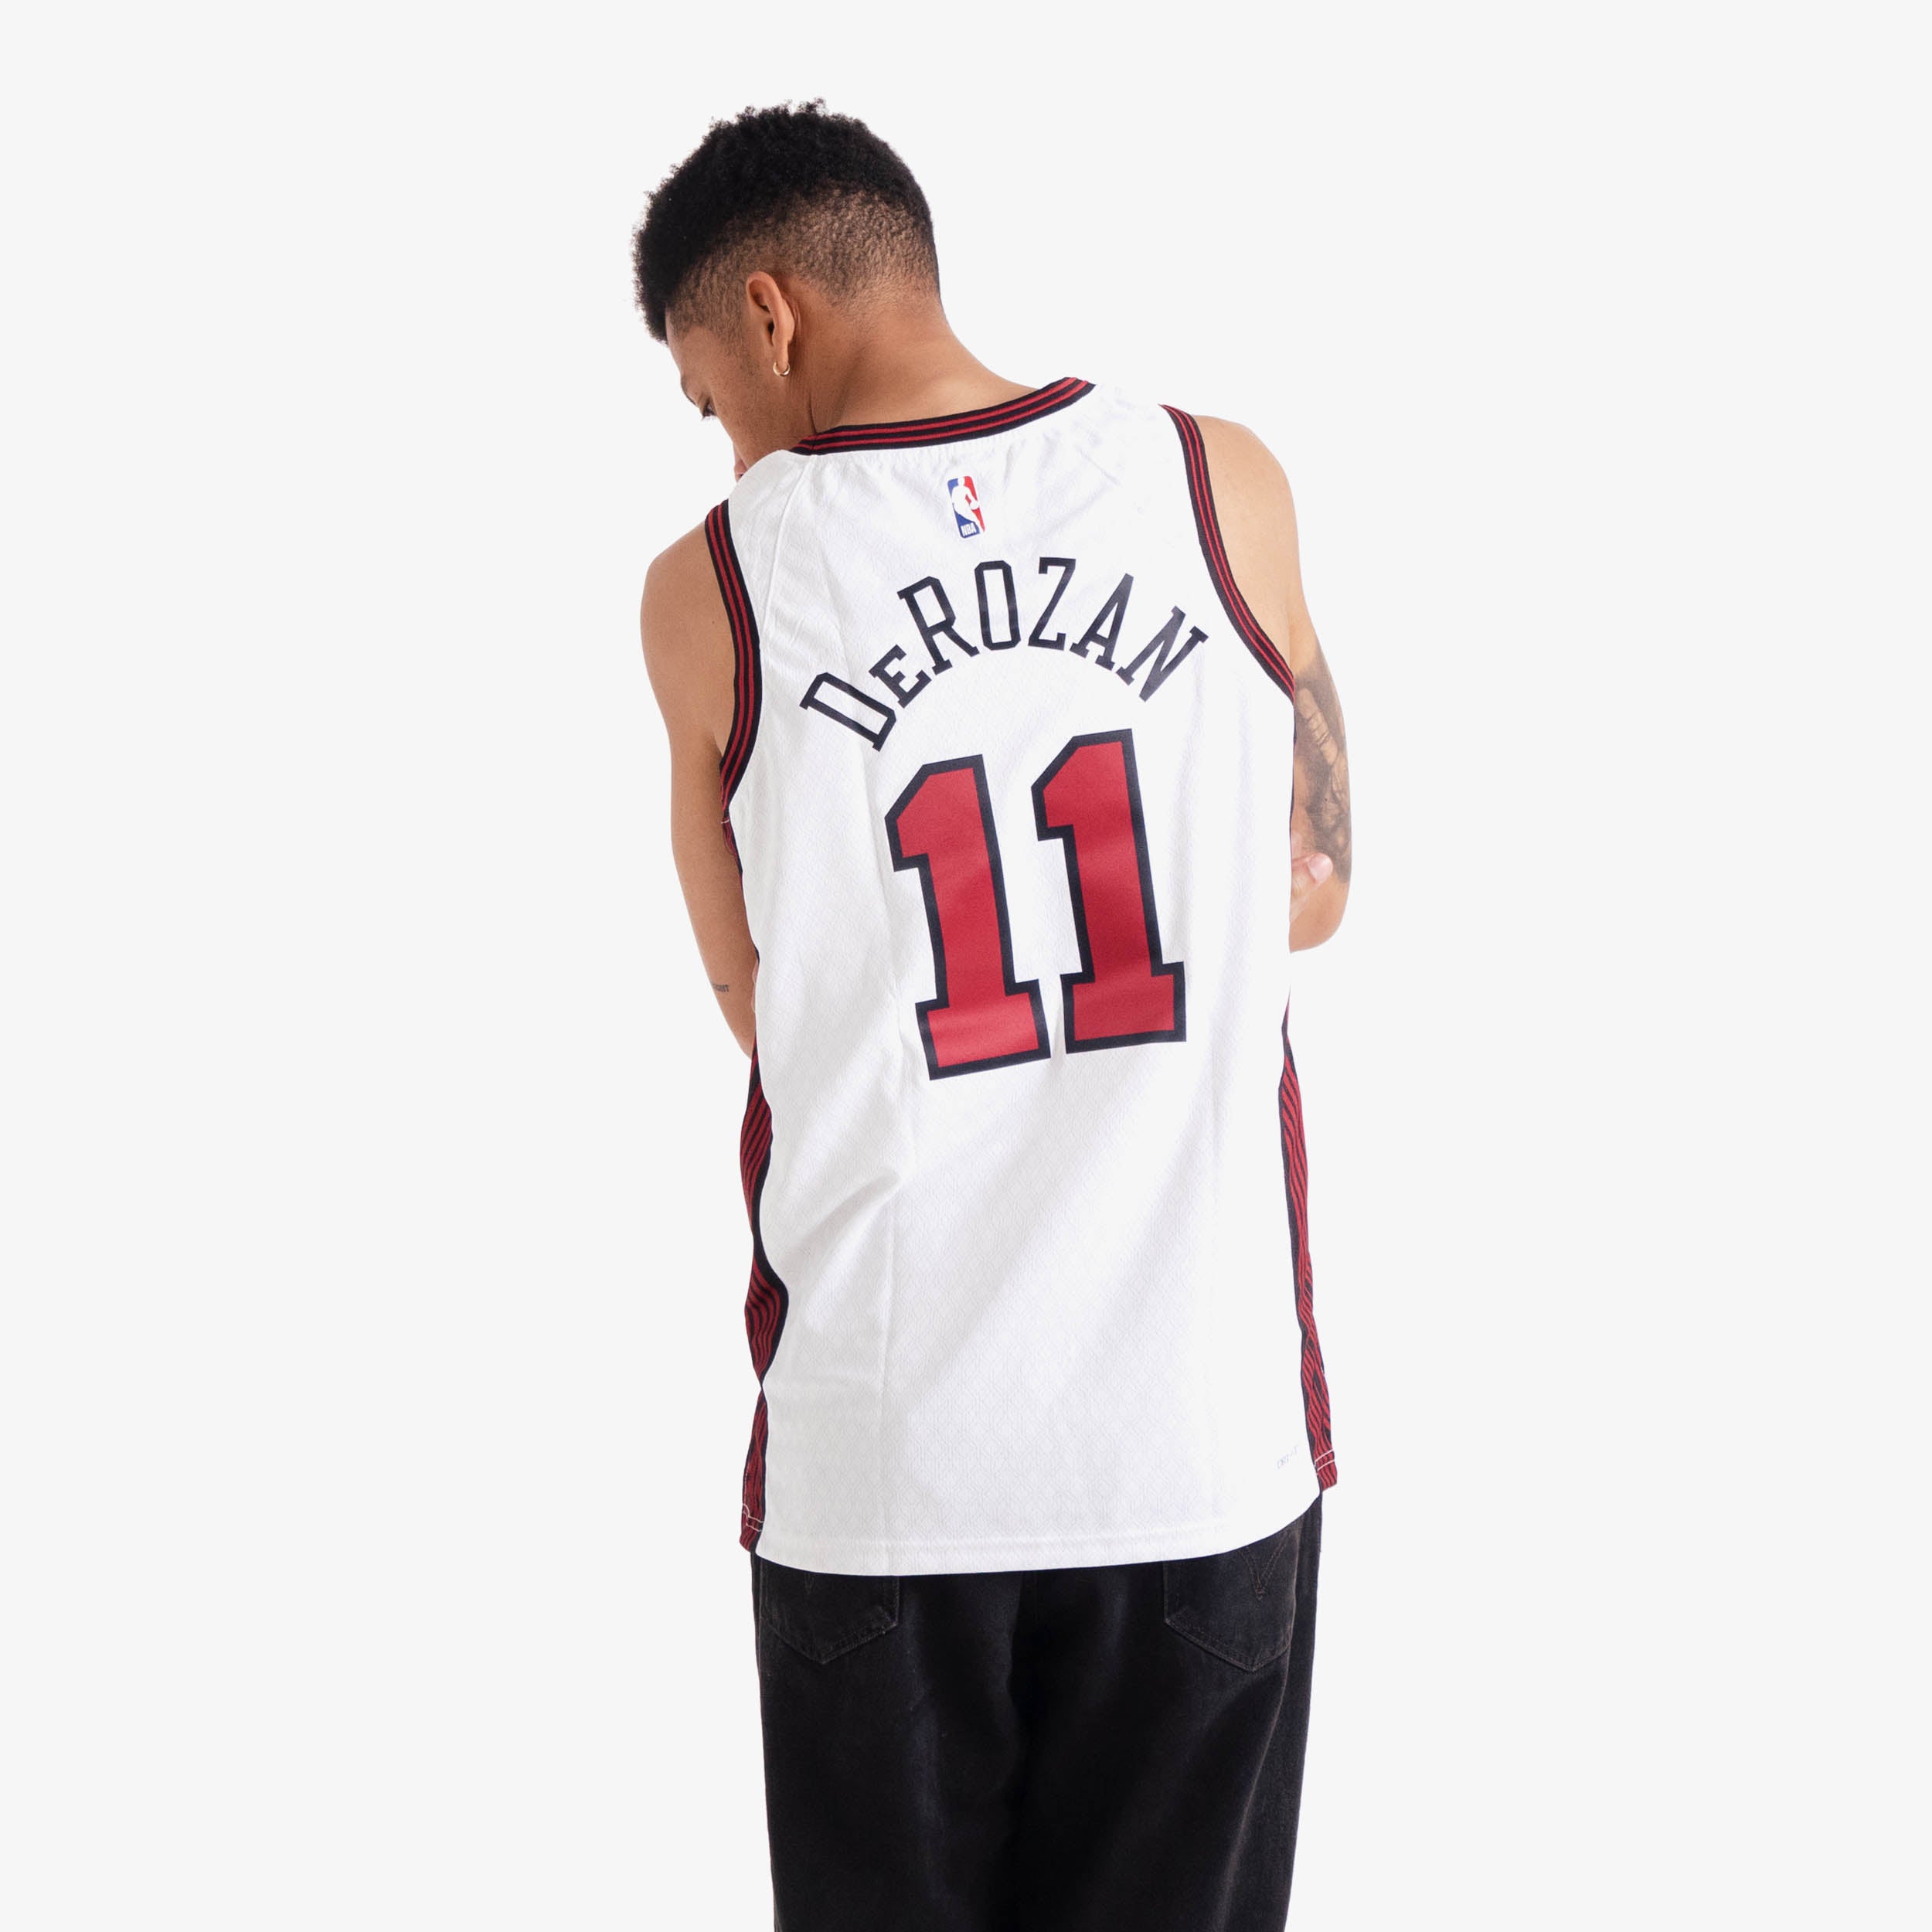 Demar Derozan Chicago Bulls City Edition Nike Dri-FIT NBA Swingman Jersey.